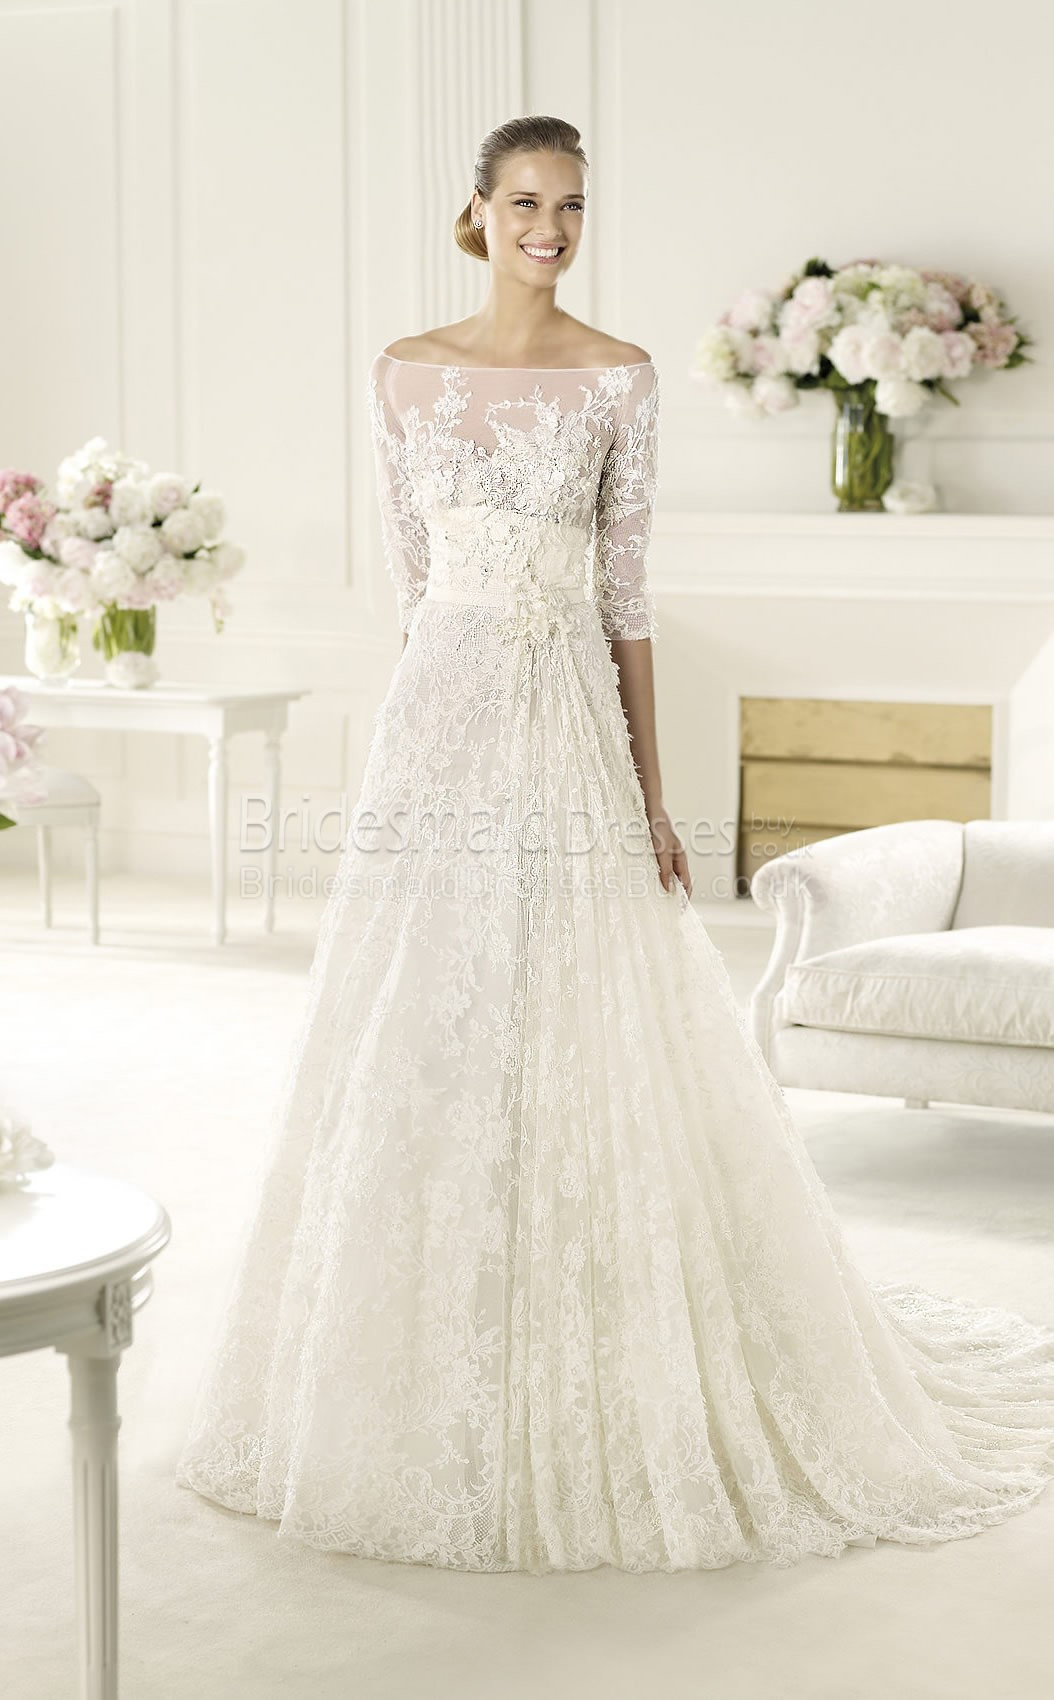 Off The Shoulder Lace Wedding Dress
 Glamorous A line Lace Satin f The Shoulder Half Sleeve